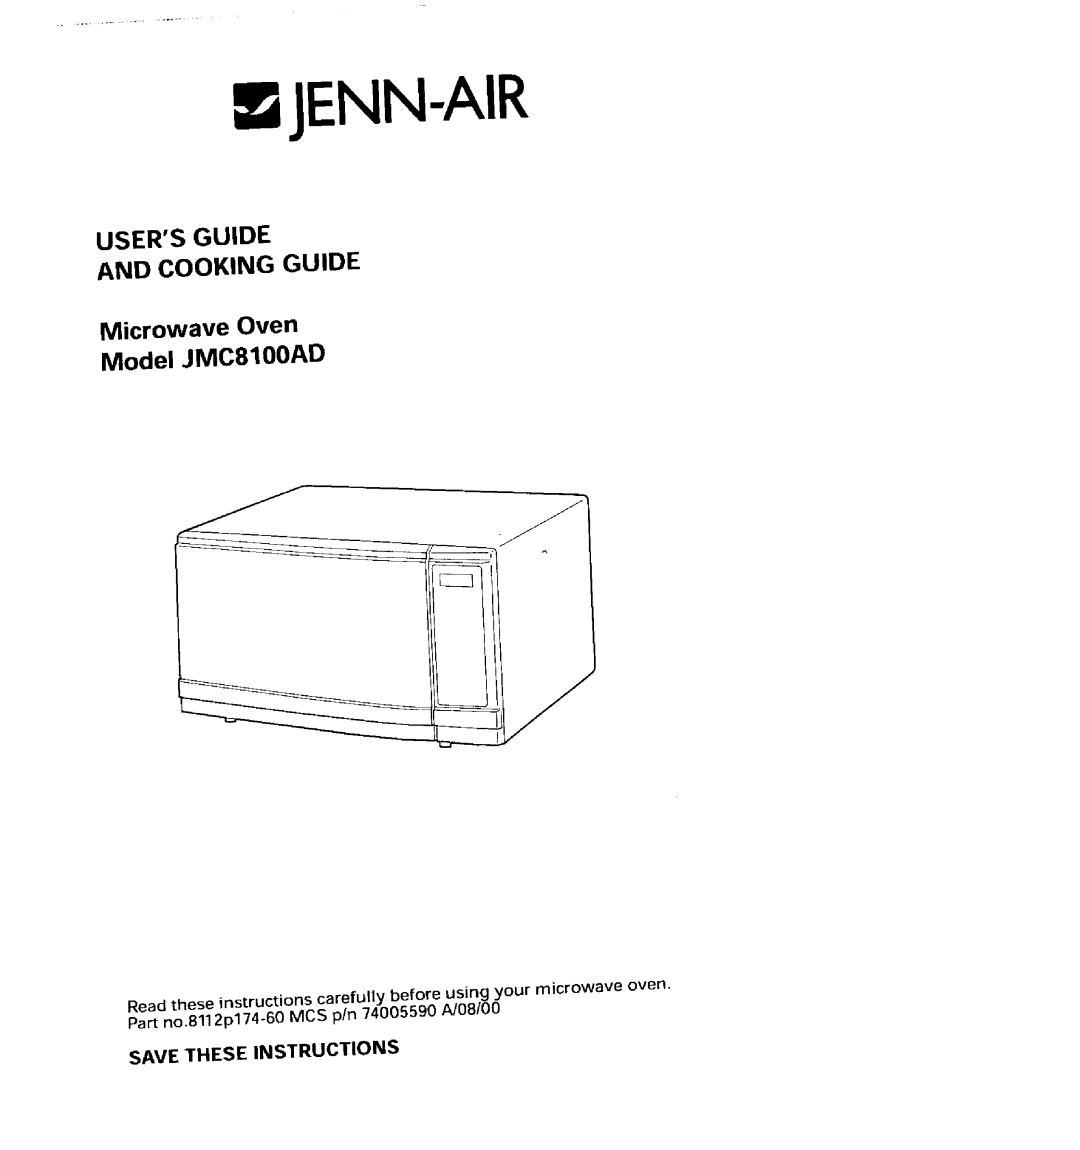 Jenn-Air JMC8100ADB manual USERS GUIDE AND COOKING GUIDE Microwave Oven, Model JMC8100AD, Savetheseinstructions, Sjenn-Air 